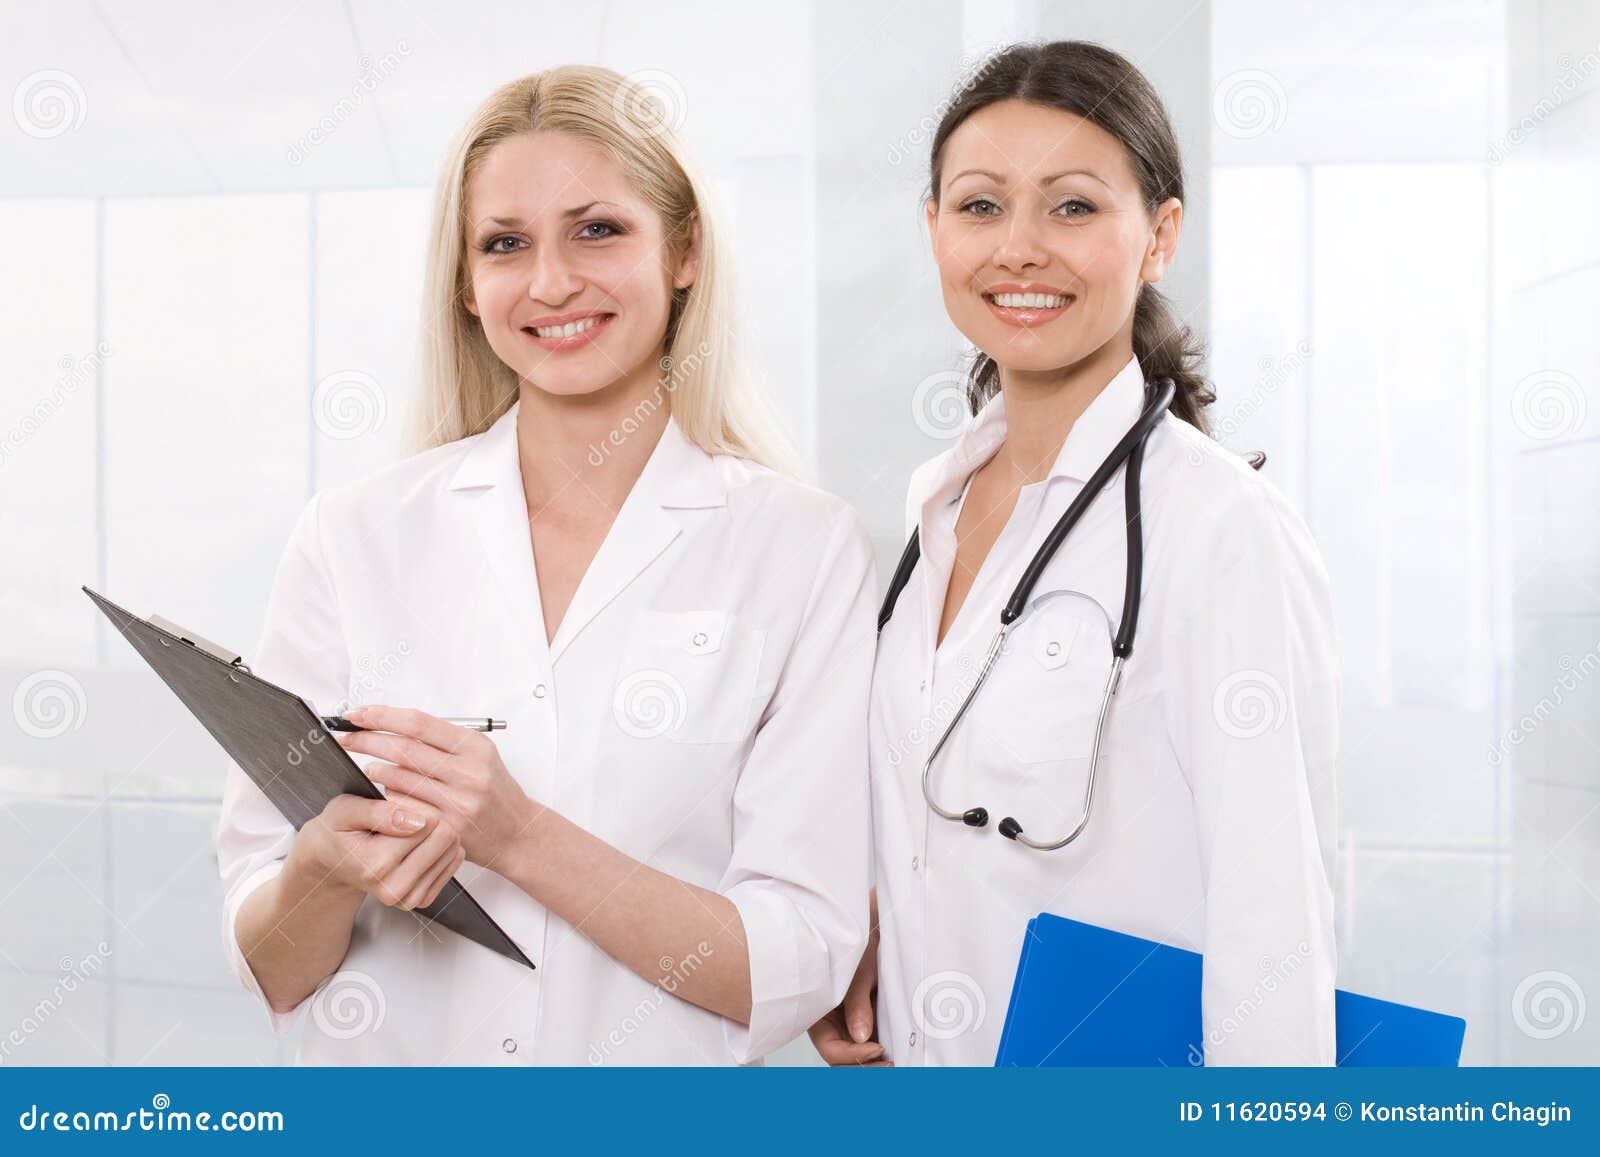 Две женщины врачи. Два врача девушки. Две девочки врачи. Женщина врач. Две девушки доктора.